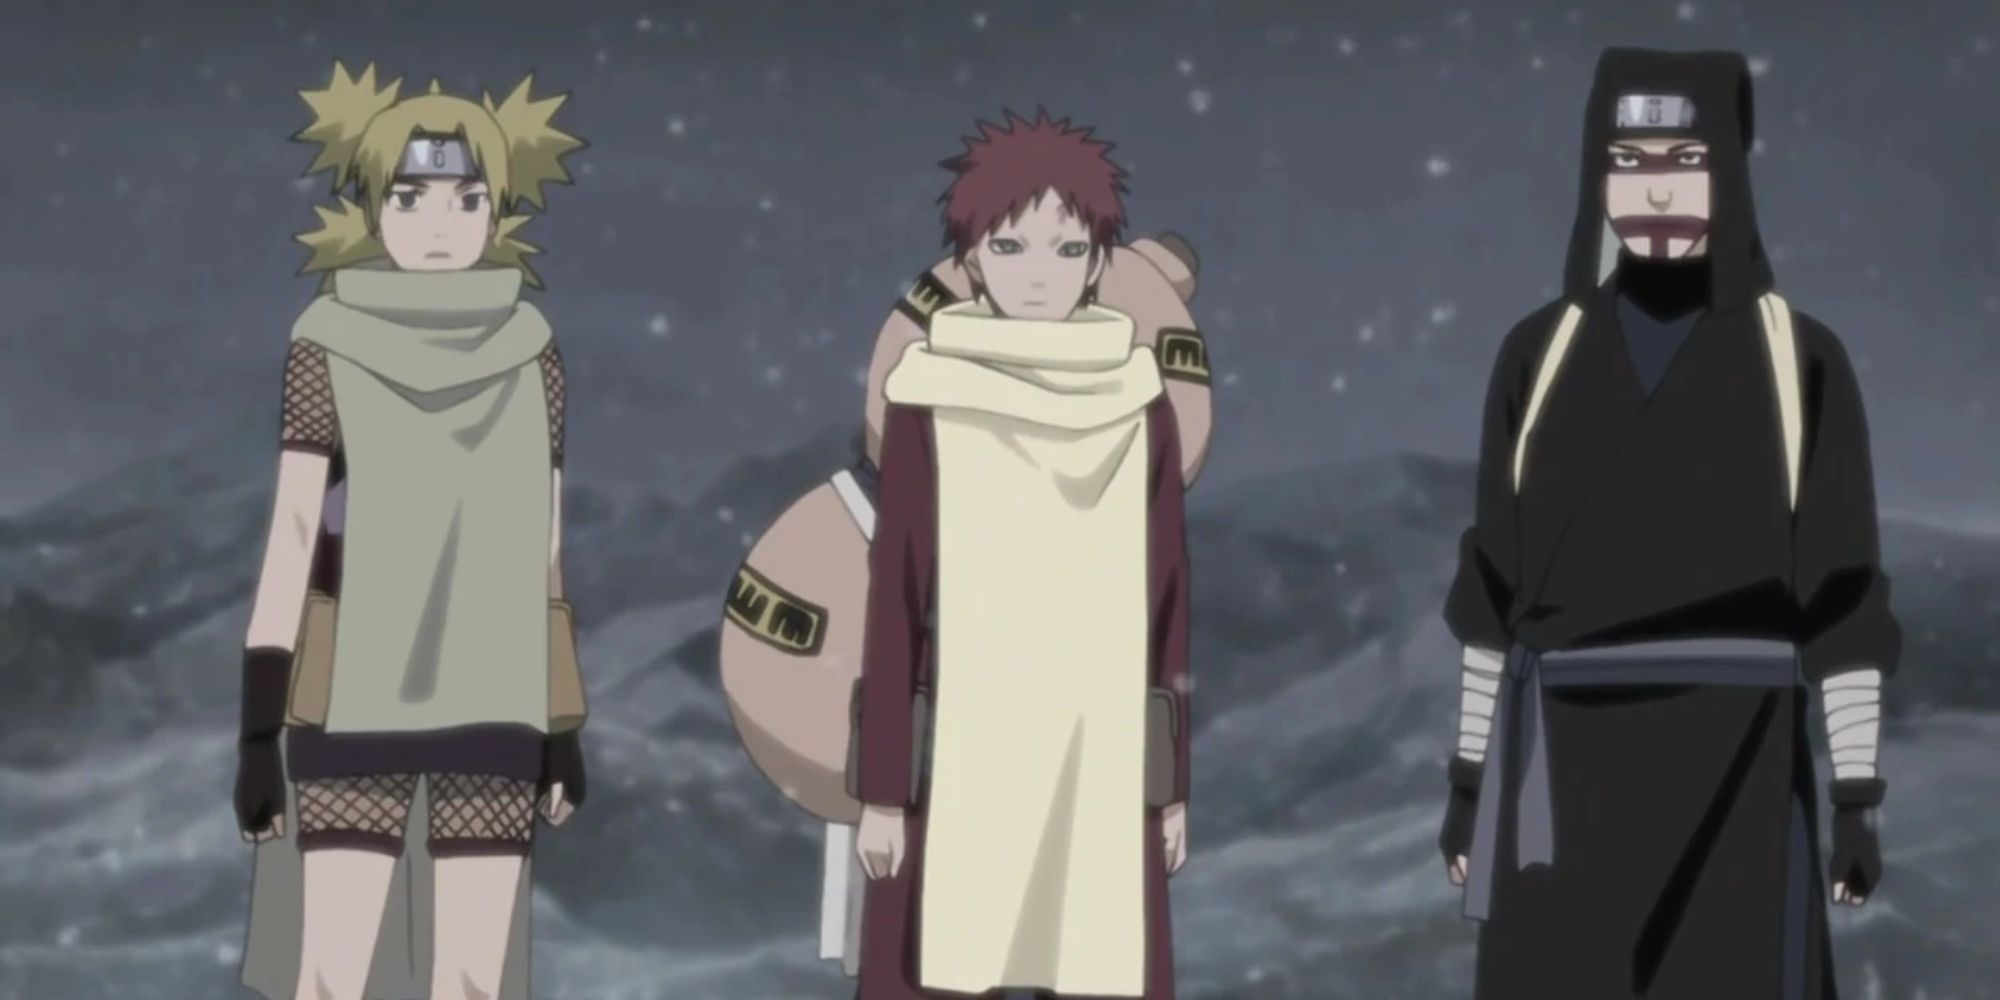 Temari, Gaara, and Kankuro stand together in Naruto